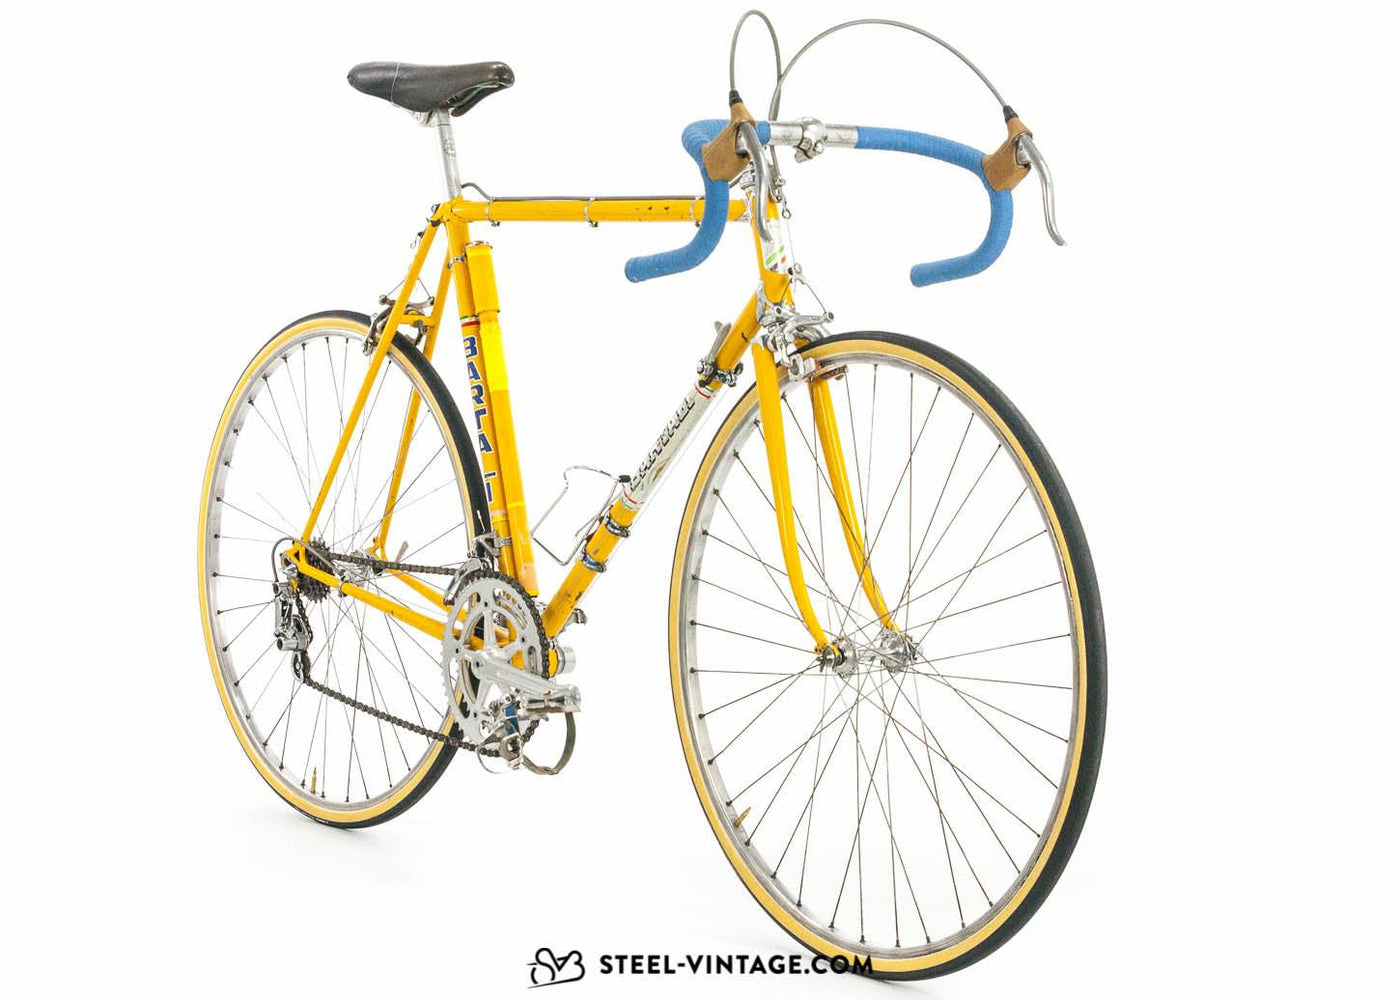 Bartali Classic Road Bike 1960s - Steel Vintage Bikes